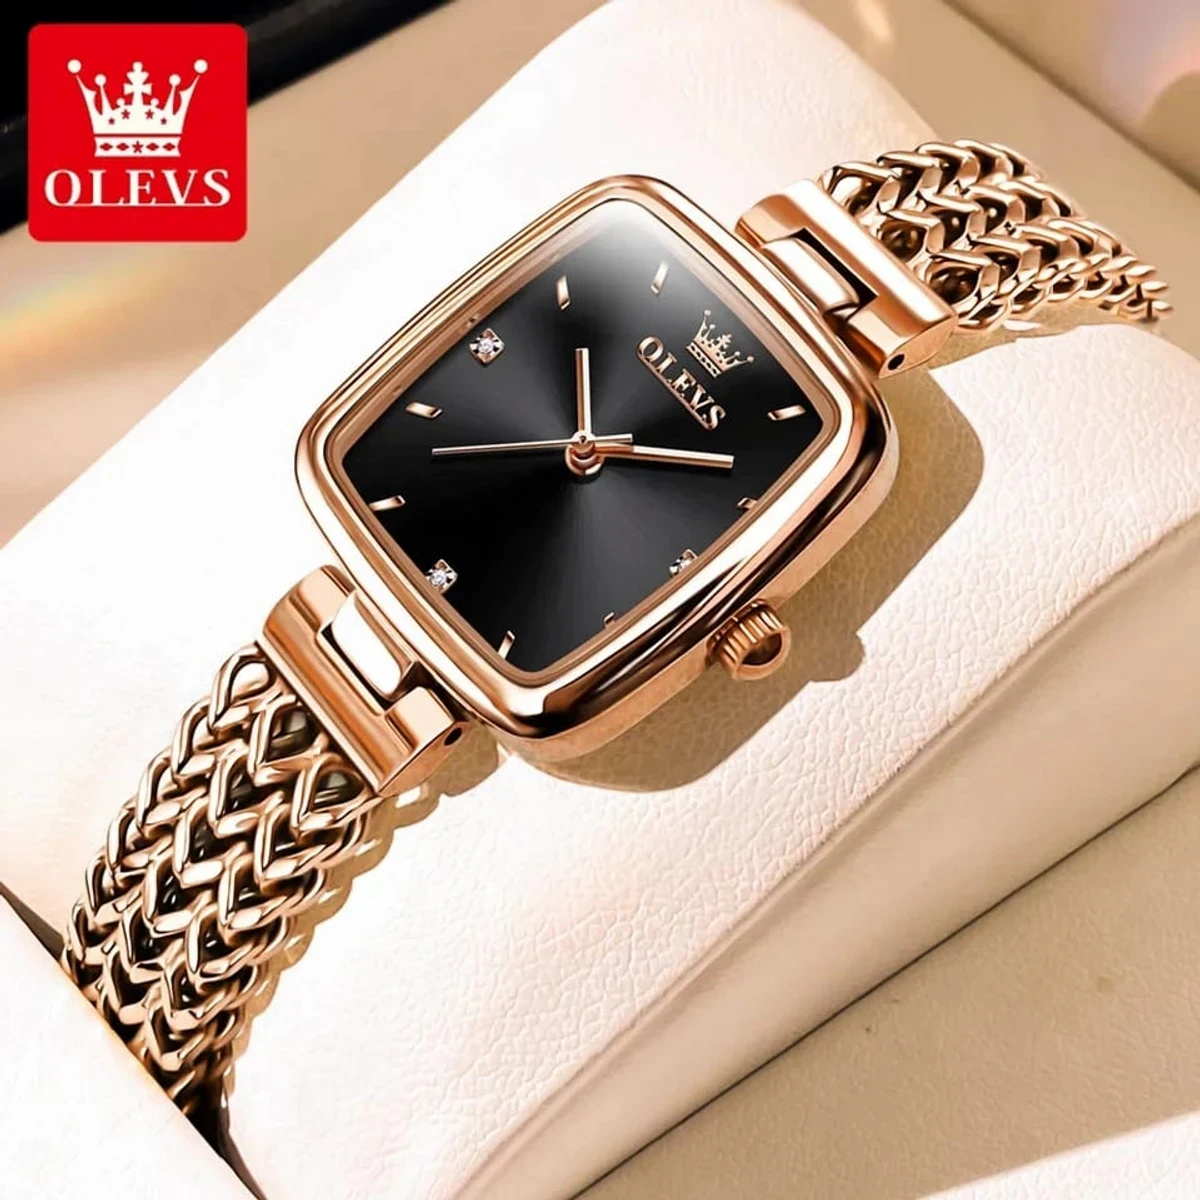 OLEVS WOMEN WATCH MODEL 9951 Square Fashion Ultra-Thin Quartz Watch - COOLER GOLDEN CHAI DIAL BLACK